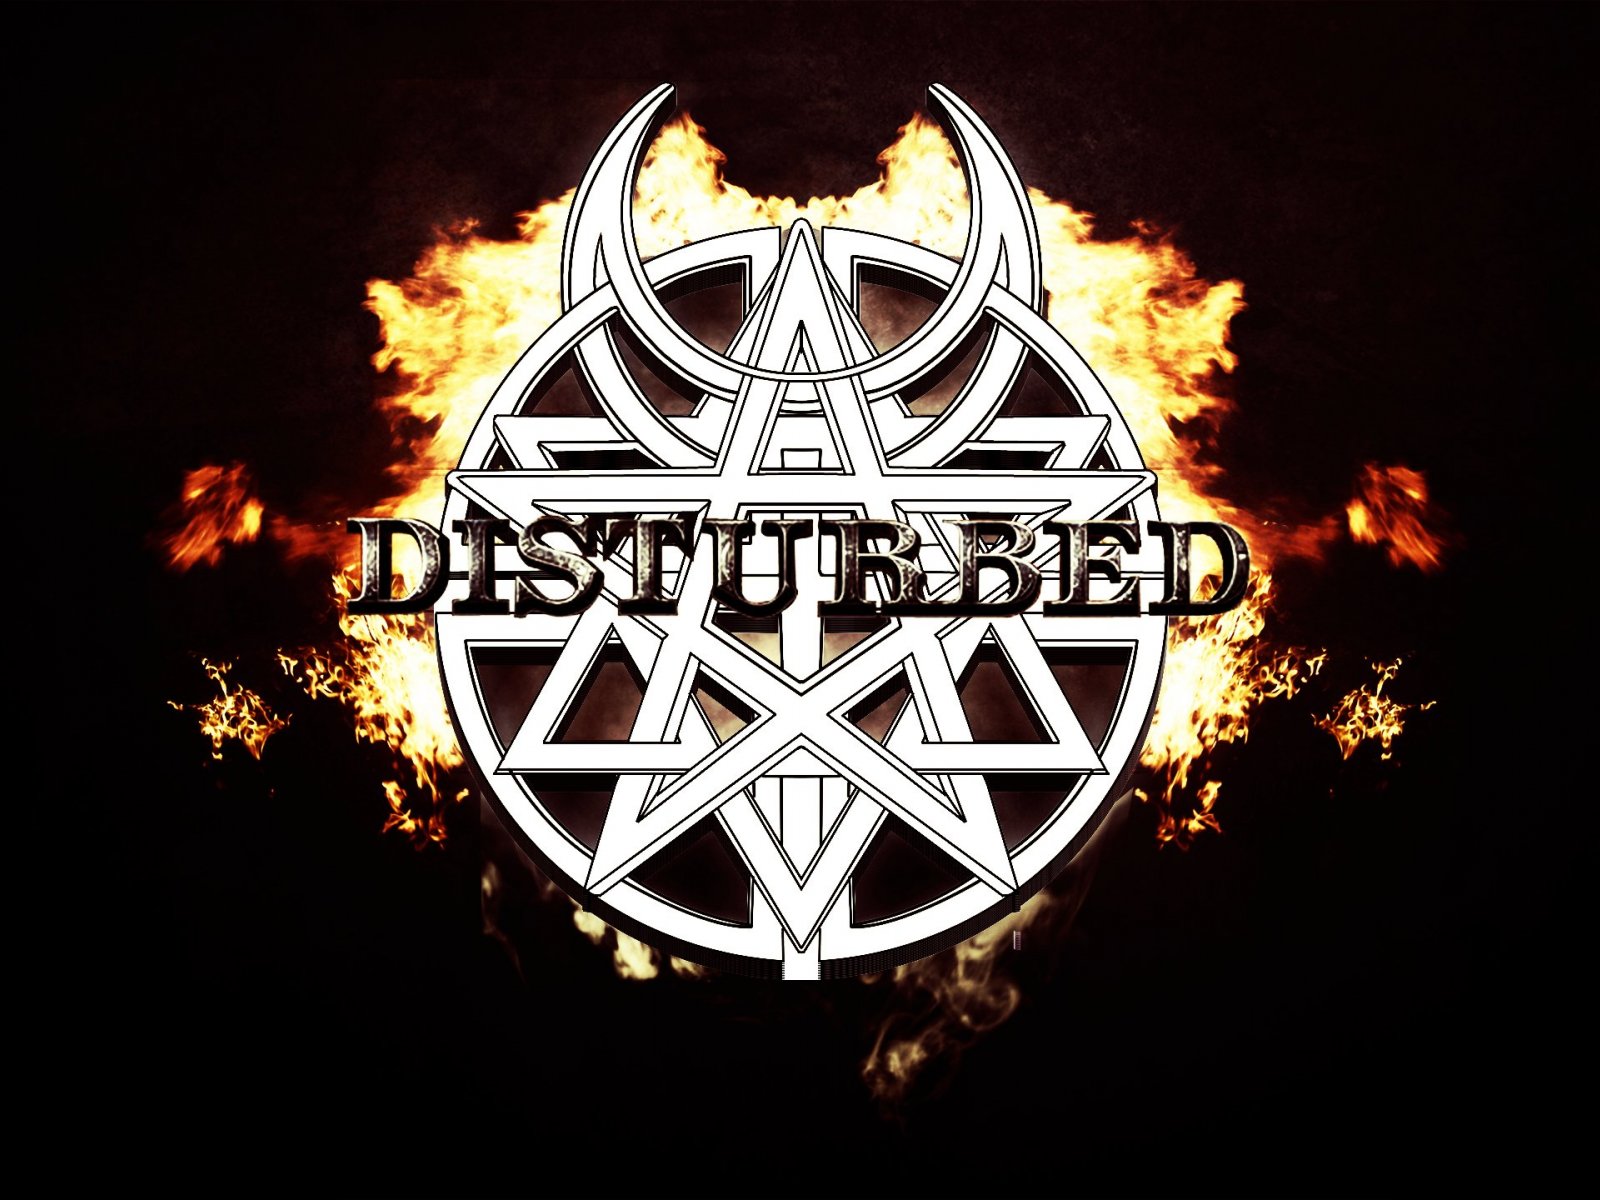 music, disturbed, disturbed (band), heavy metal 32K